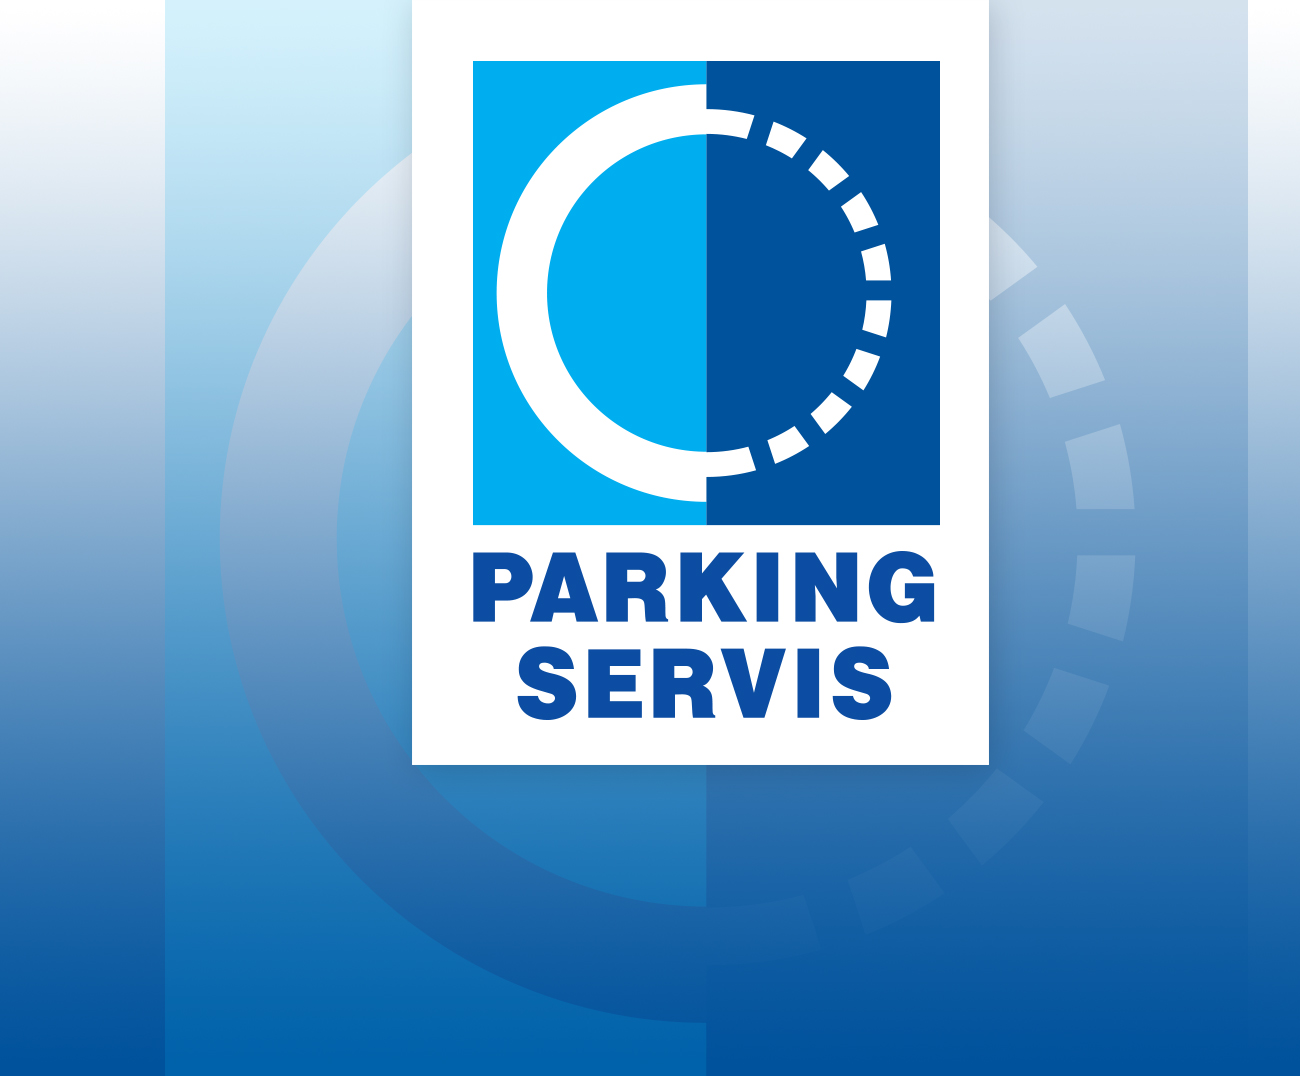 Parking servis